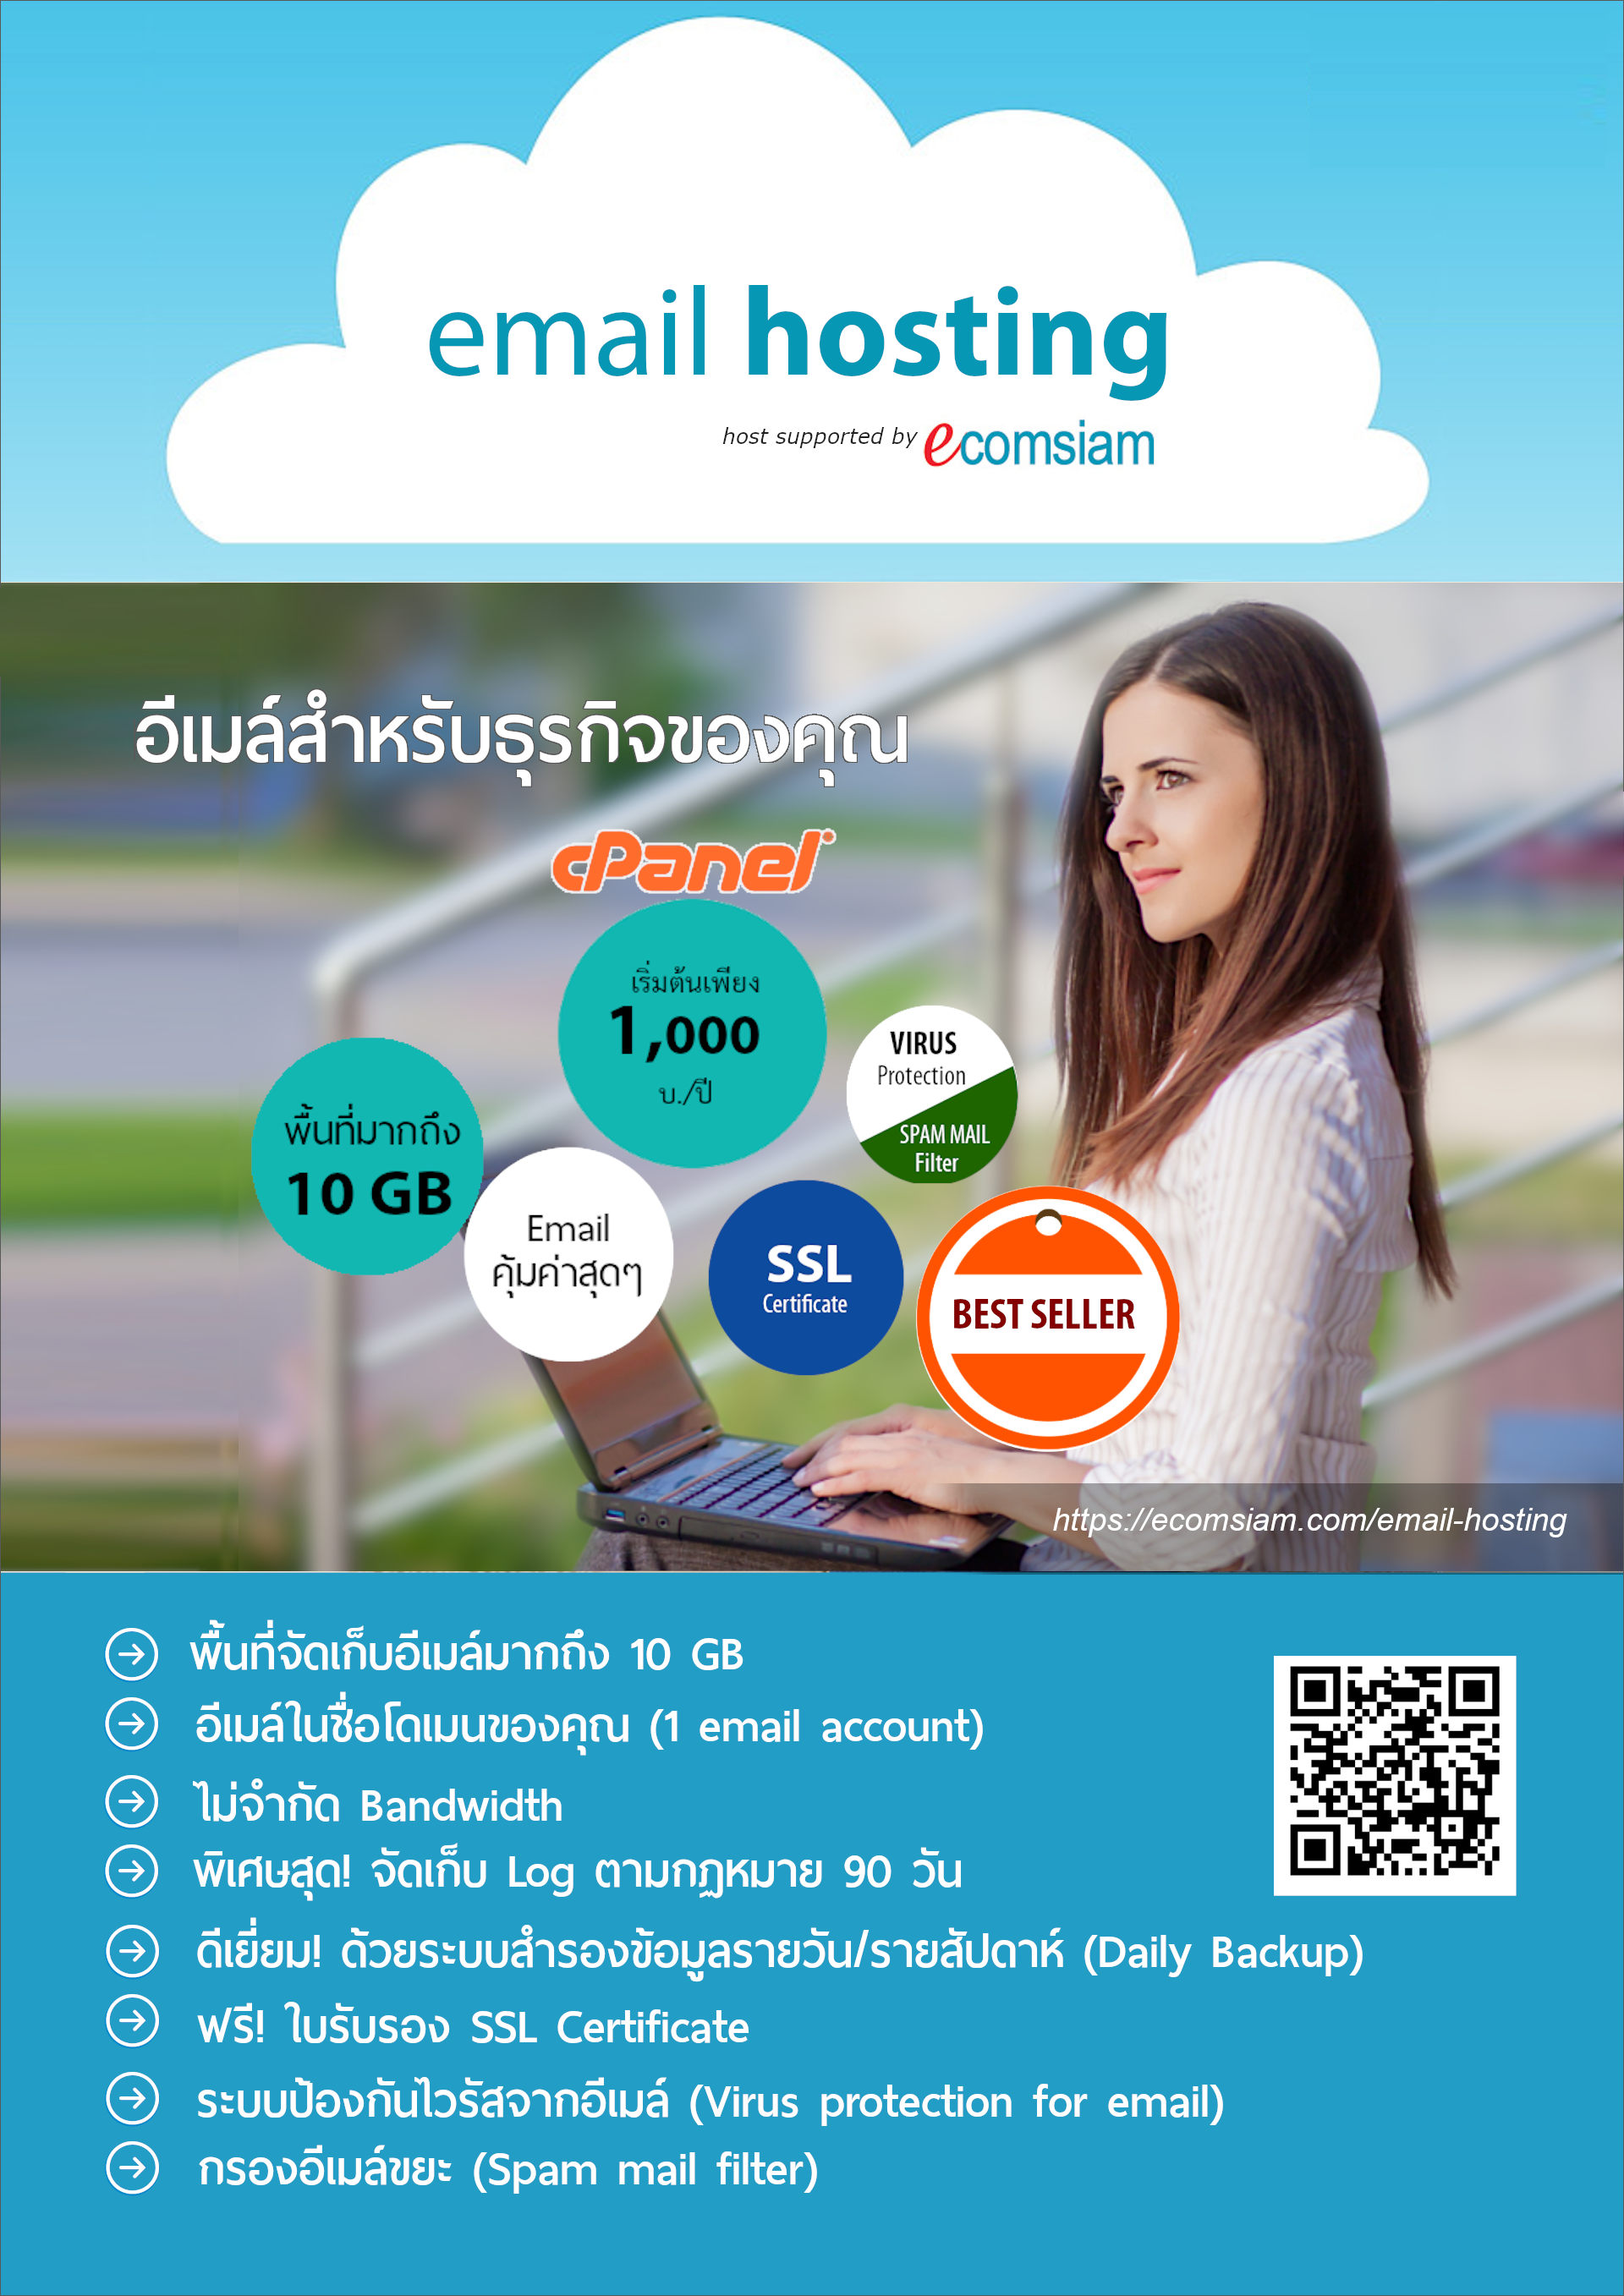 โบรชัวร์แนะนำบริการ  email Hosting thai คุณภาพ บริการดี พื้นที่มาก  คุณภาพสูง  hosting พื้นที่มาก บริการดี  ฟรี SSL ระบบควบคุมจัดการ Web hosting ไทย ด้วย Cpanel ที่ง่าย สะดวก และปลอดภัย hosting เพื่อใช้งานอีเมล์ สำหรับธุรกิจของคุณ มีระบบเก็บ log file ตามกฏหมาย มีความปลอดภัยในการใช้งาน พร้อมมีระบบสำรองข้อมูลรายวัน (daily backup) และ สำรองข้อมูลรายสัปดาห์ (weekly backup) ระบบป้องกันไวรัสจากอีเมล์ (virus protection) พร้อมระบบกรองสแปมส์เมล์หรือกรองอีเมล์ขยะ (Spammail filter) เริ่มต้นเพียง 1000 บาทต่อปี   พื้นที่ 10 GB 1 email สอบถามรายละเอียดเพิ่มเติม  โทร.หาเราตอนนี้เลย  02-9682665 หรือ line : @ecomsiam โฮสติ้งคุณภาพ บริการลูกค้าดี ดูแลดี  แนะนำเว็บโฮสติ้ง โดย ecomsiam.com